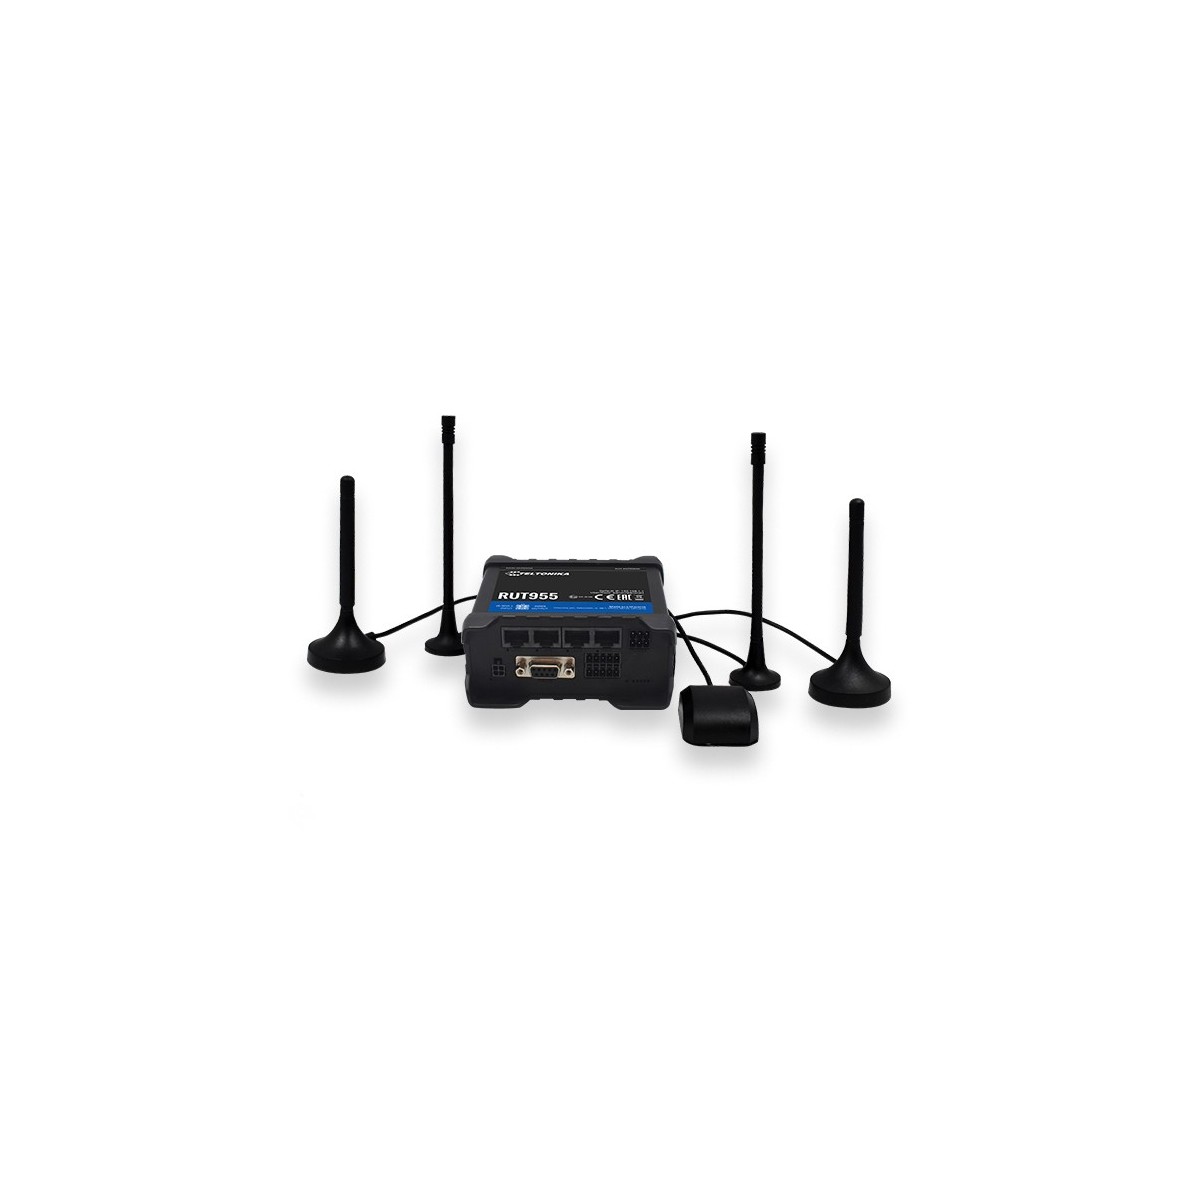 Teltonika RUT955 - Wi-Fi 4 (802.11n) - Single-band (2.4 GHz) - Ethernet LAN - 3G - Black - Tabletop router